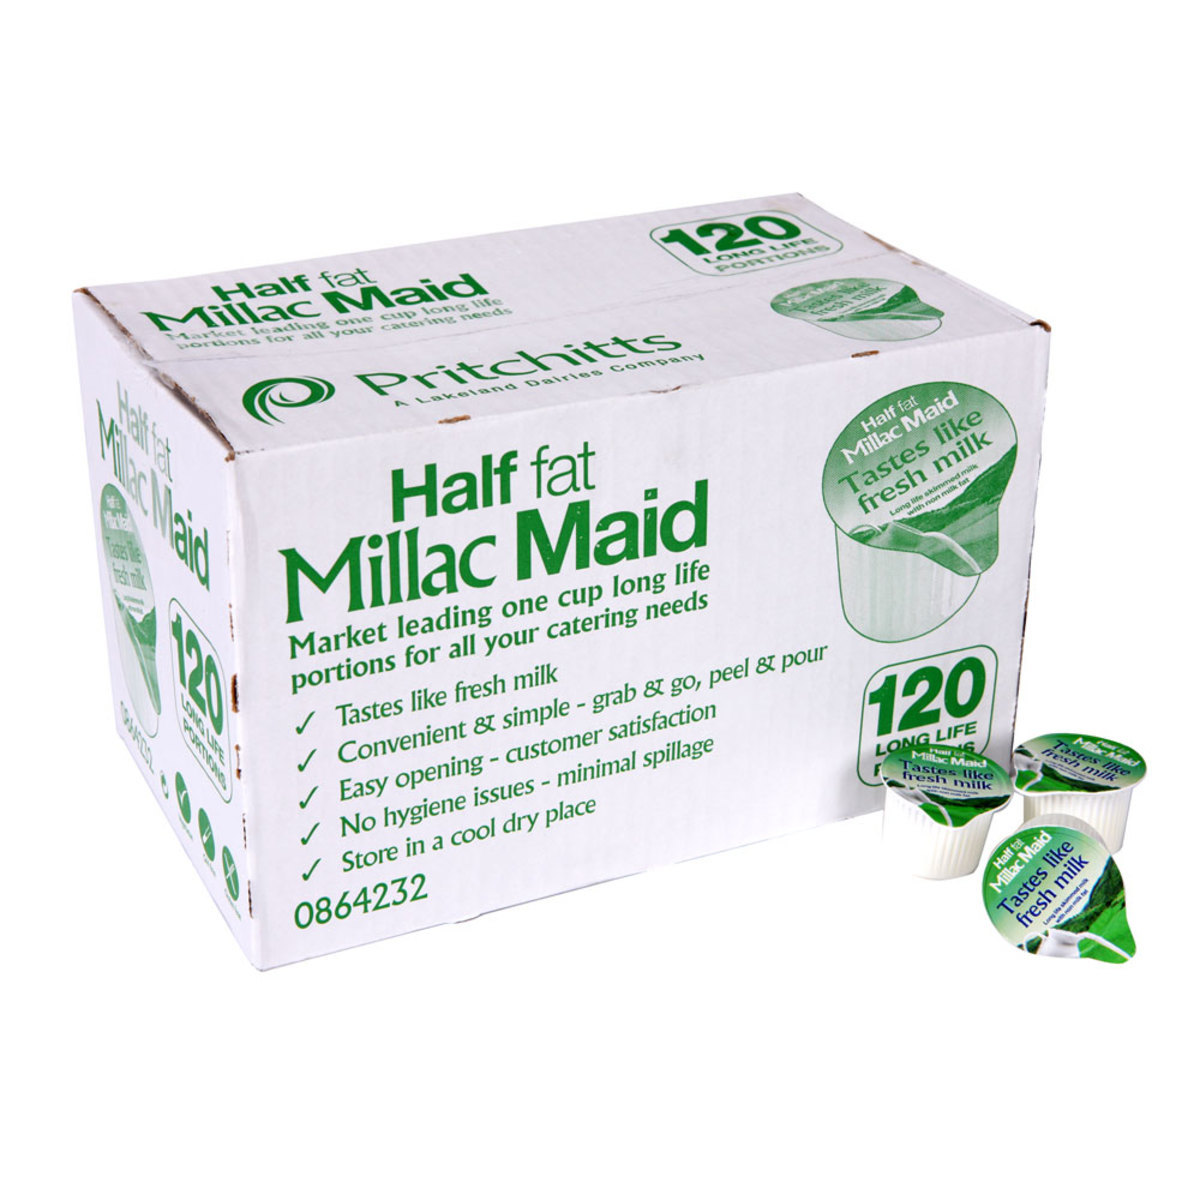 Half Fat Millac Maid, 120 Portions